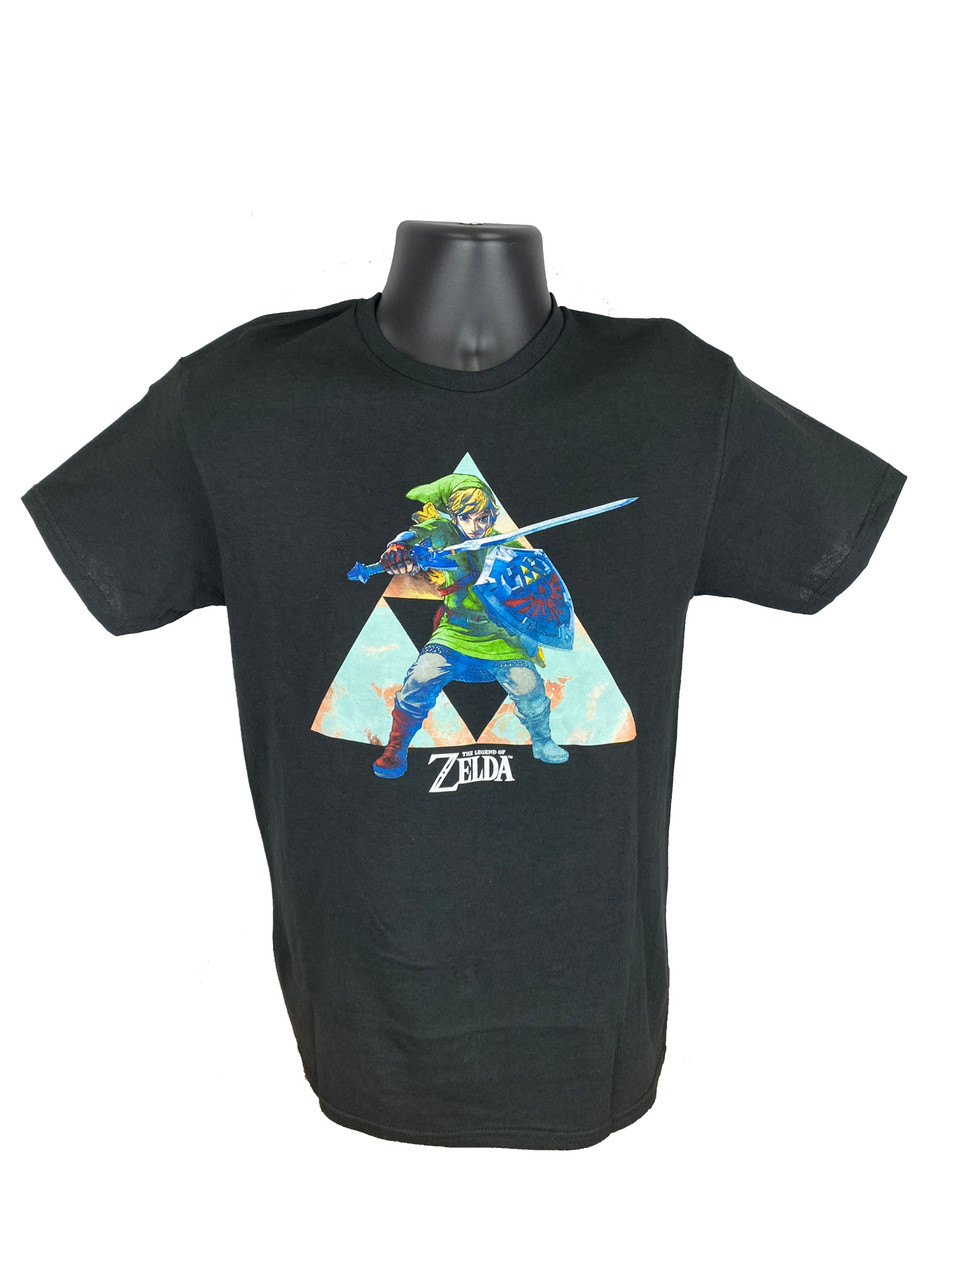 OFFICIAL Legend of Zelda Shirts & Merchandise